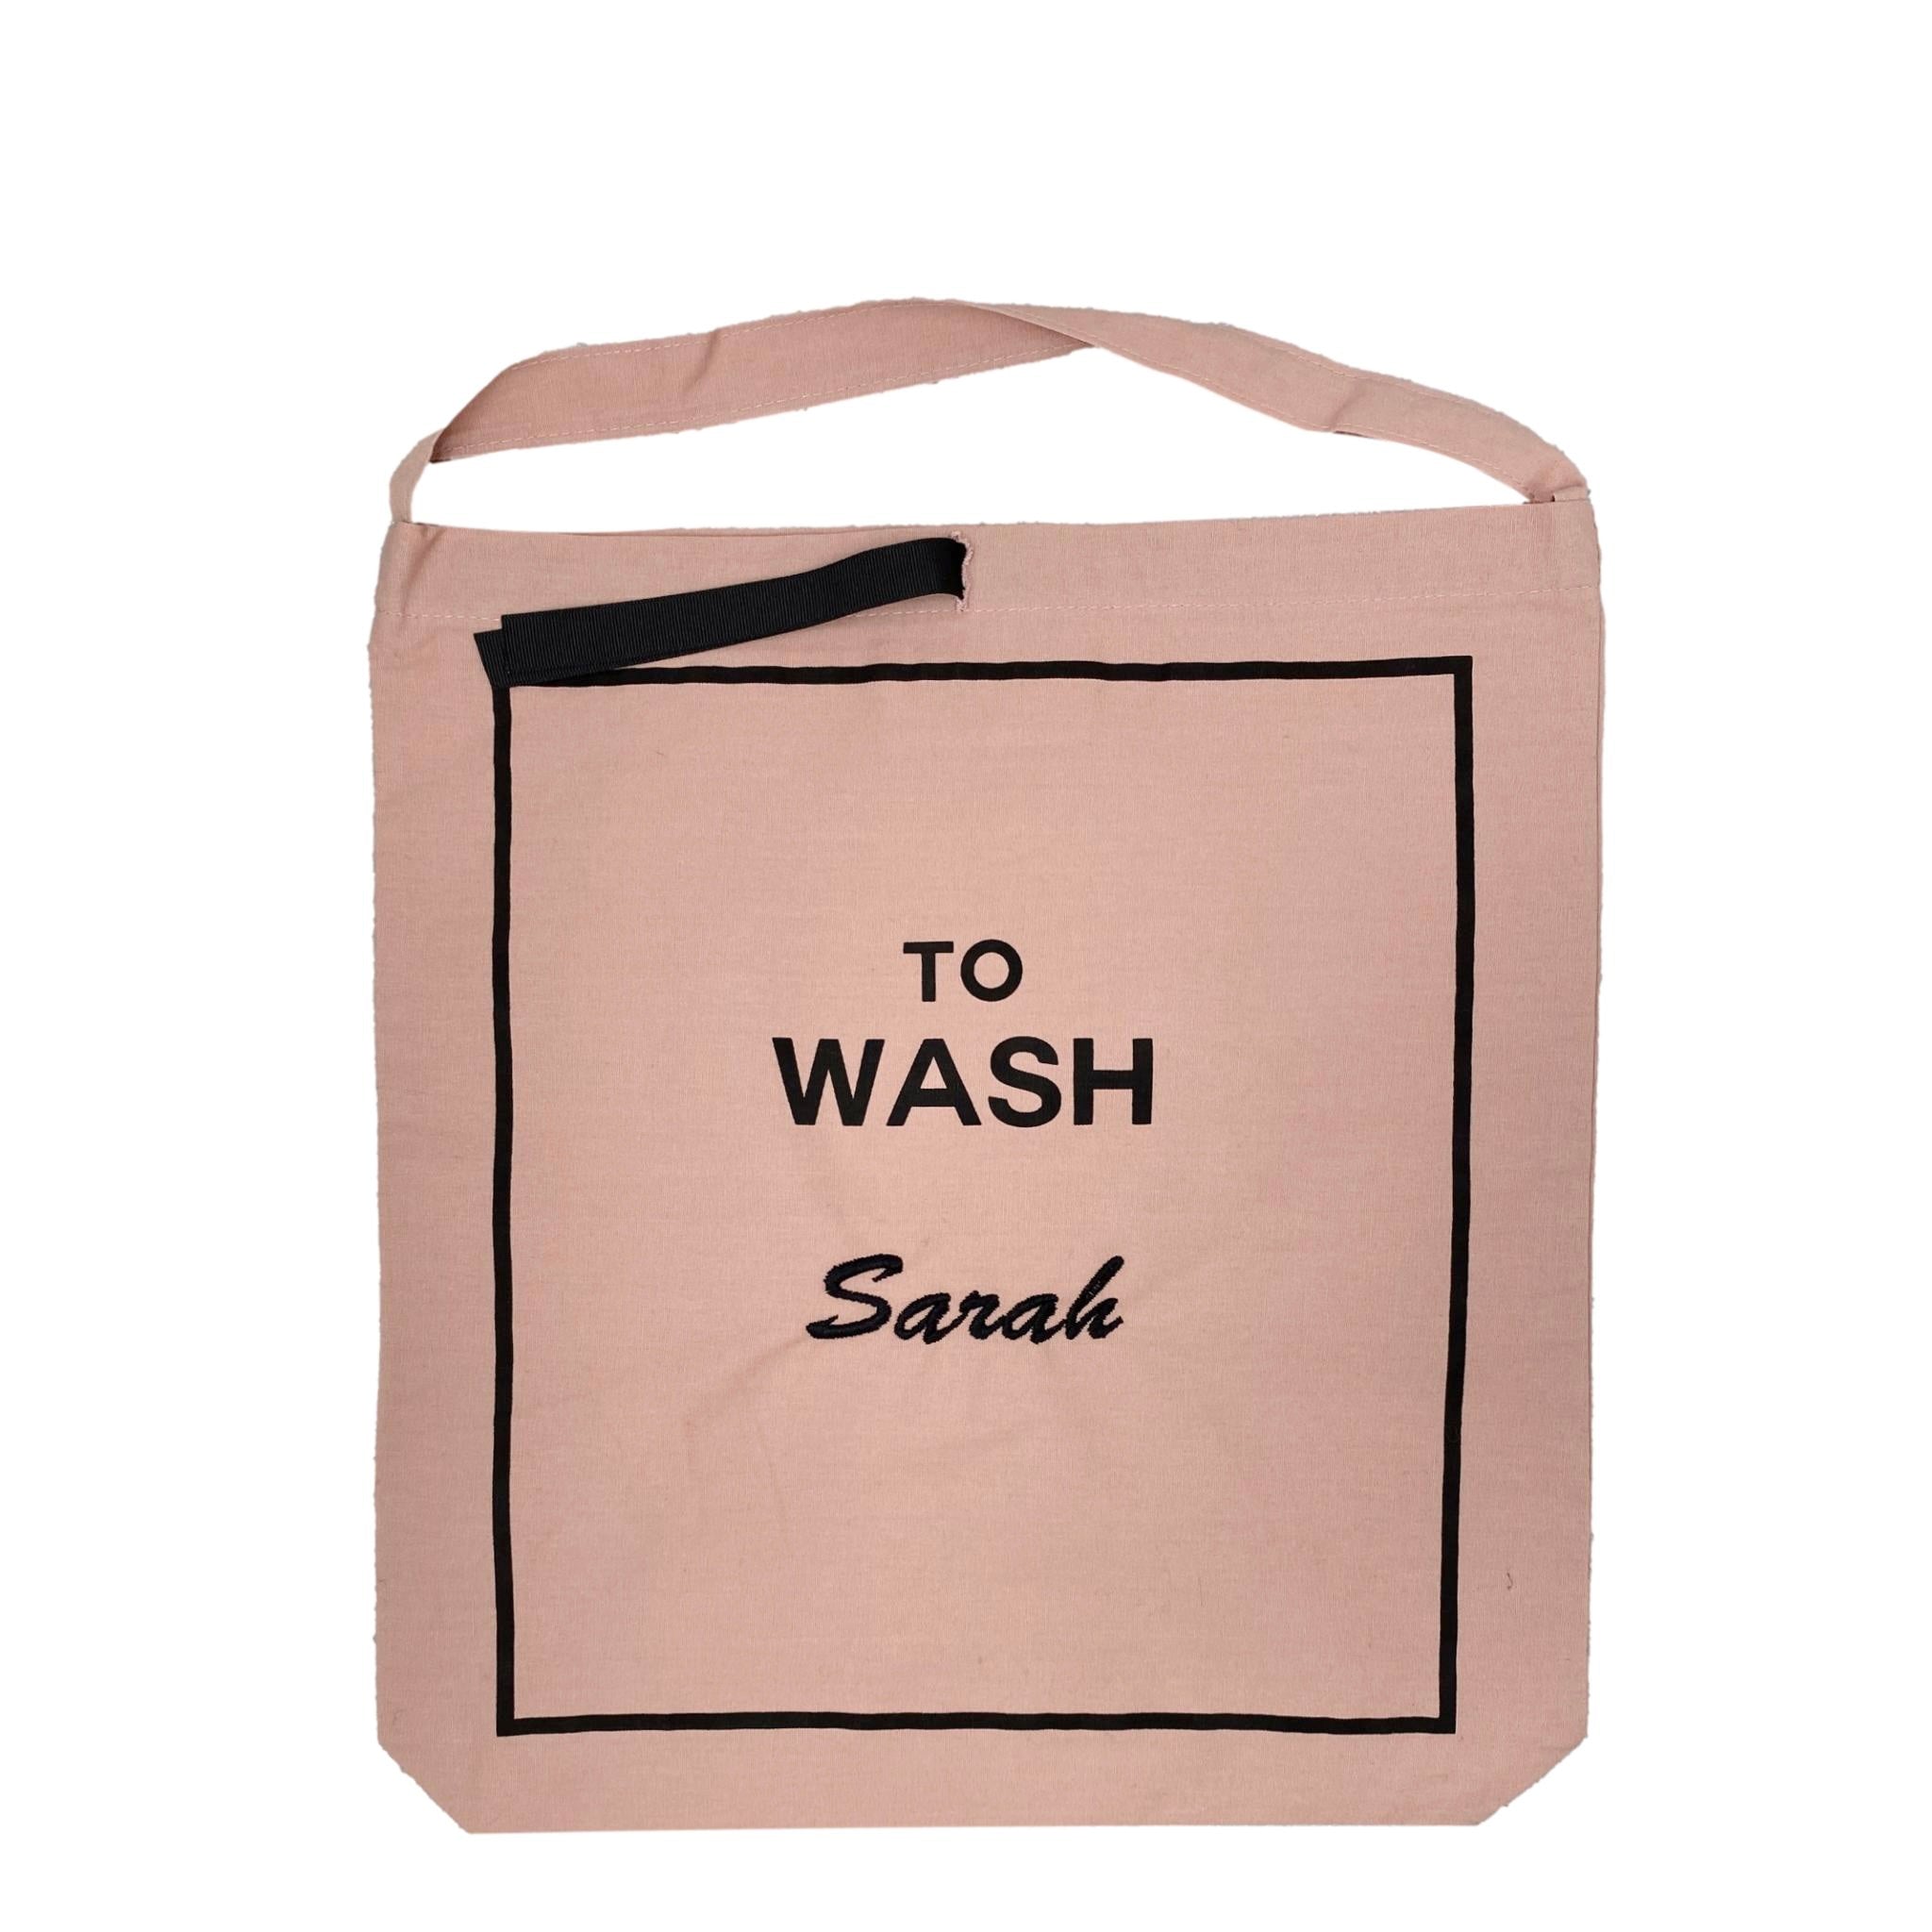 Best Deal Gift Set, 4-pack Travel & Home, Pink/Blush | Bag-all